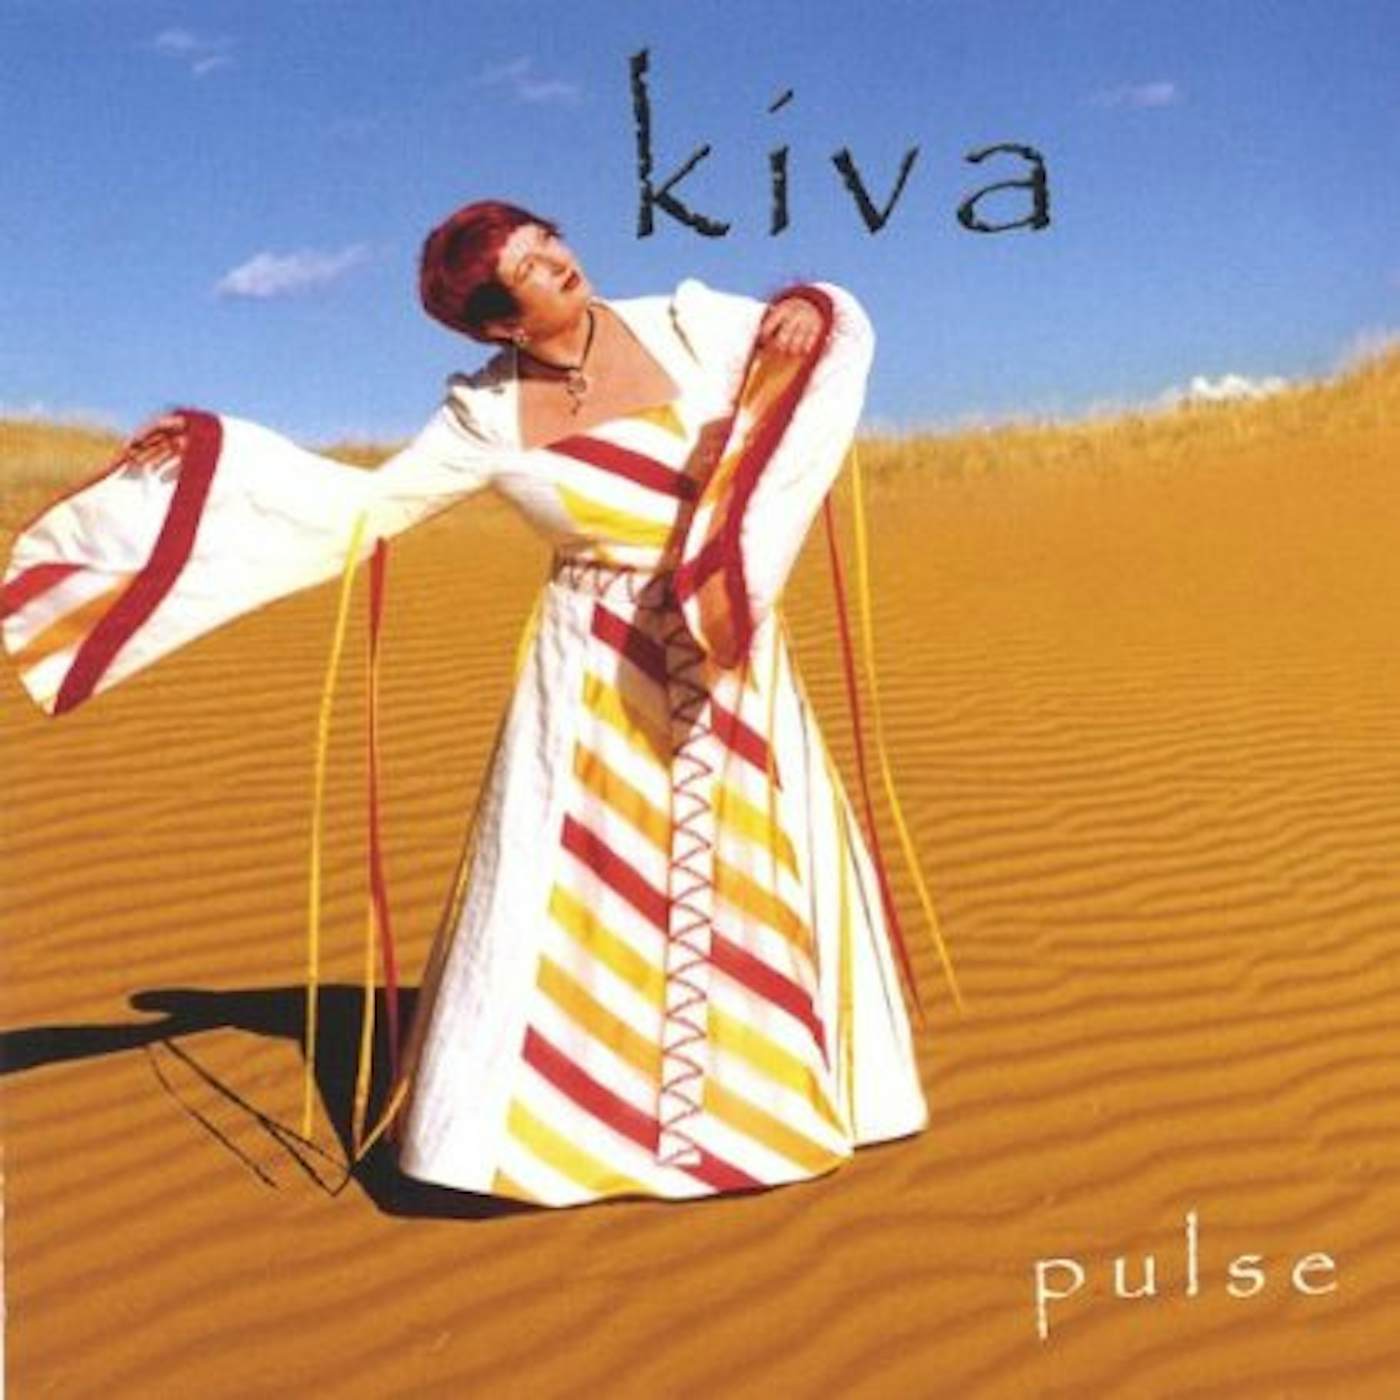 KIVA PULSE CD